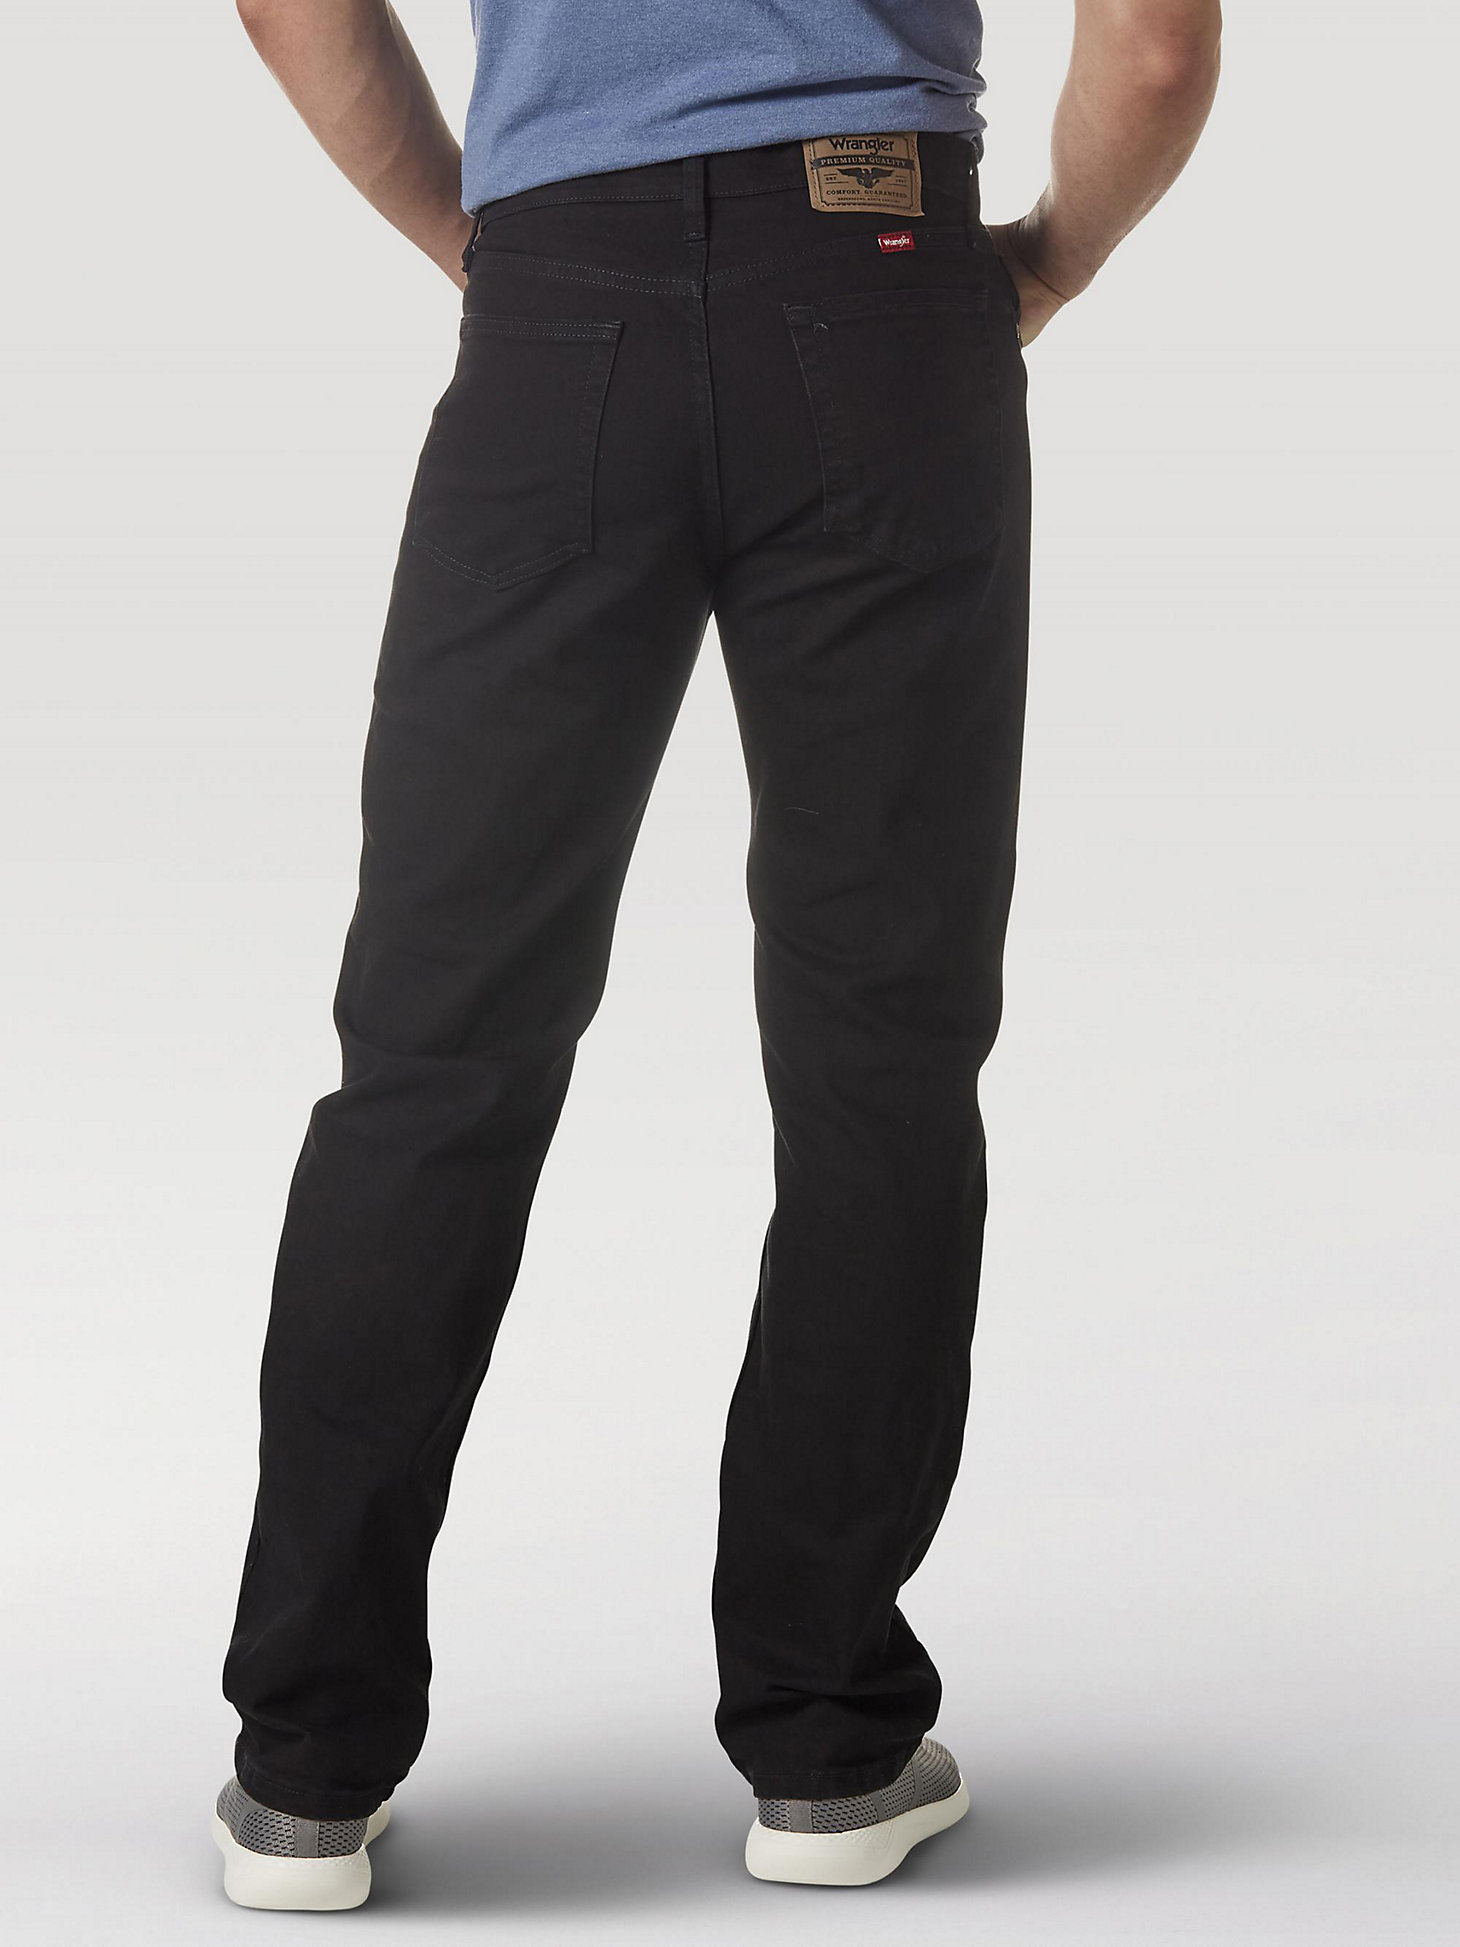 Wrangler® Five Star Premium Performance Series Regular Fit Jean in Black alternative view 1